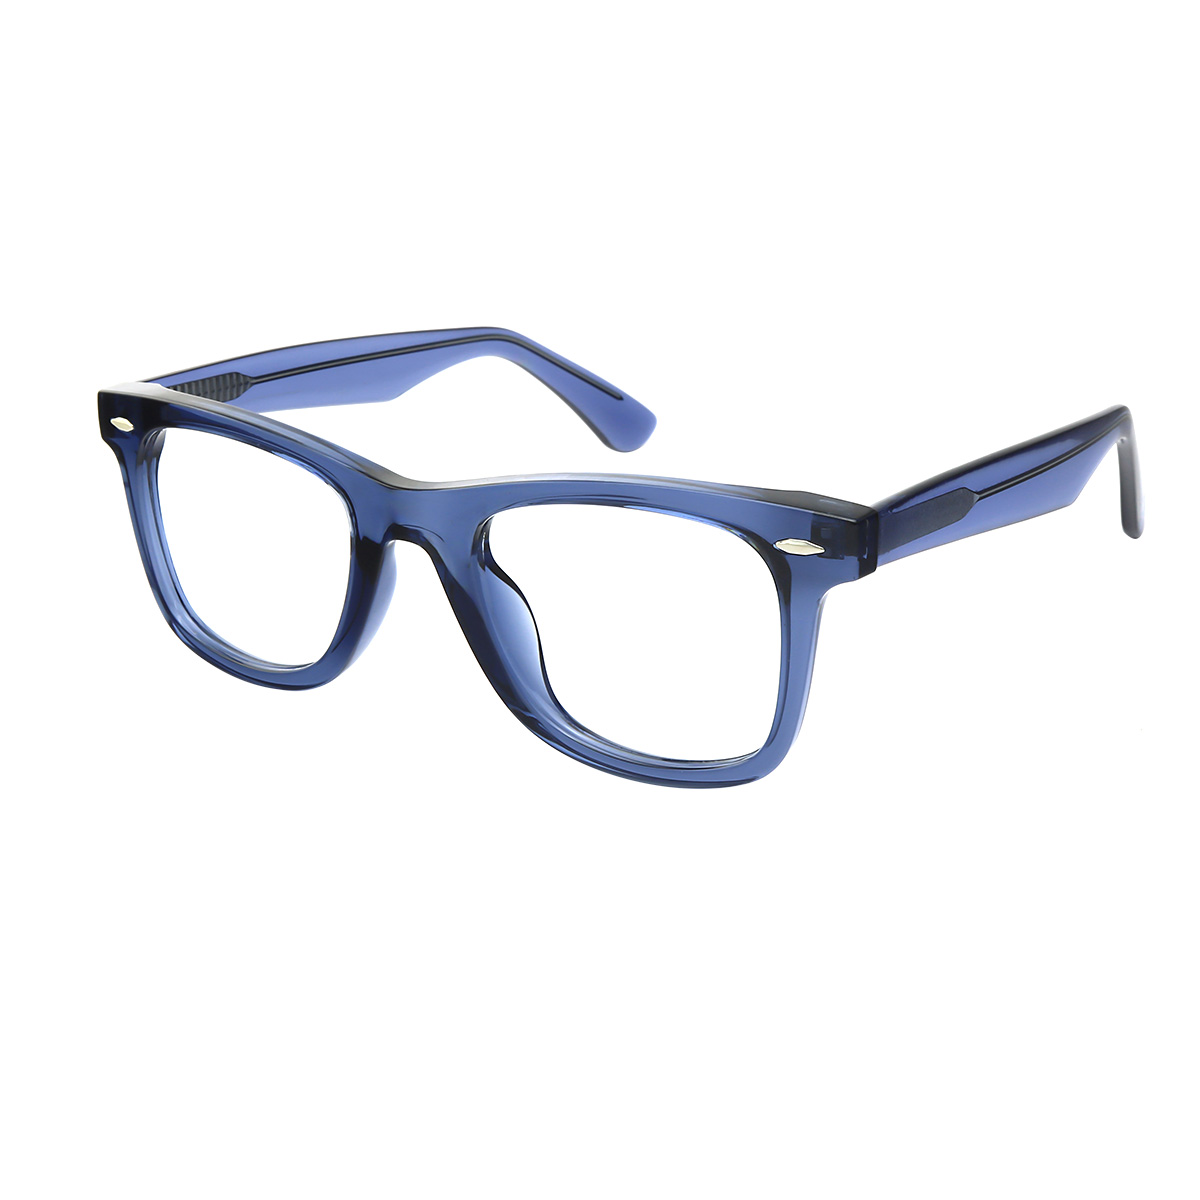 Patricia - Square Blue/Transparent Reading Glasses for Men & Women